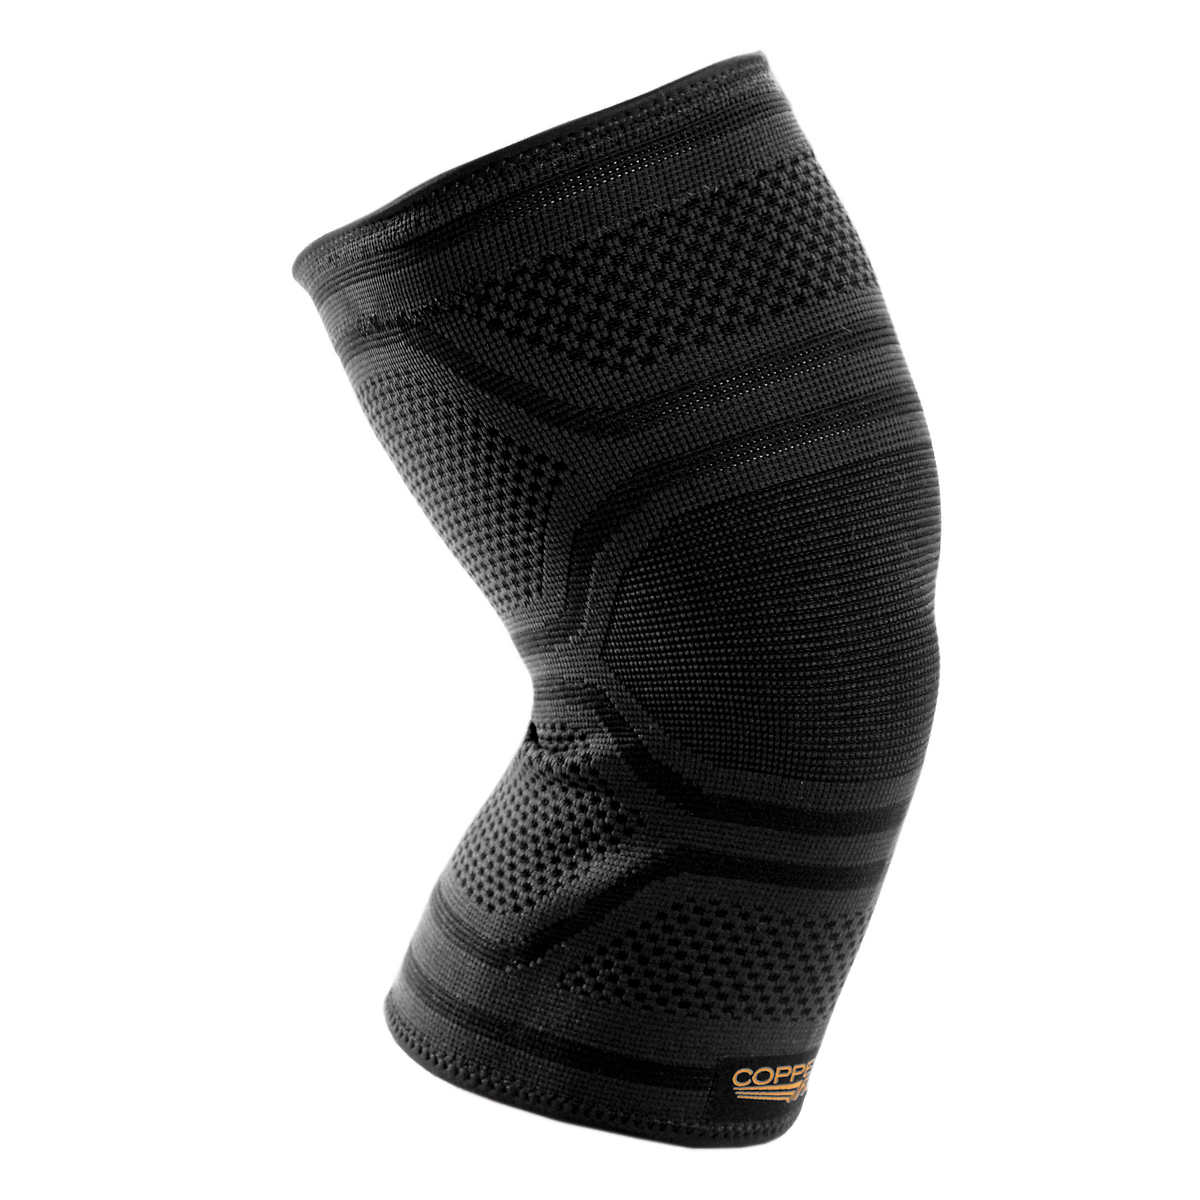 Unisex Pro Elite Sleeve 2.0 Elite Sleeve One Size Fits All Black 